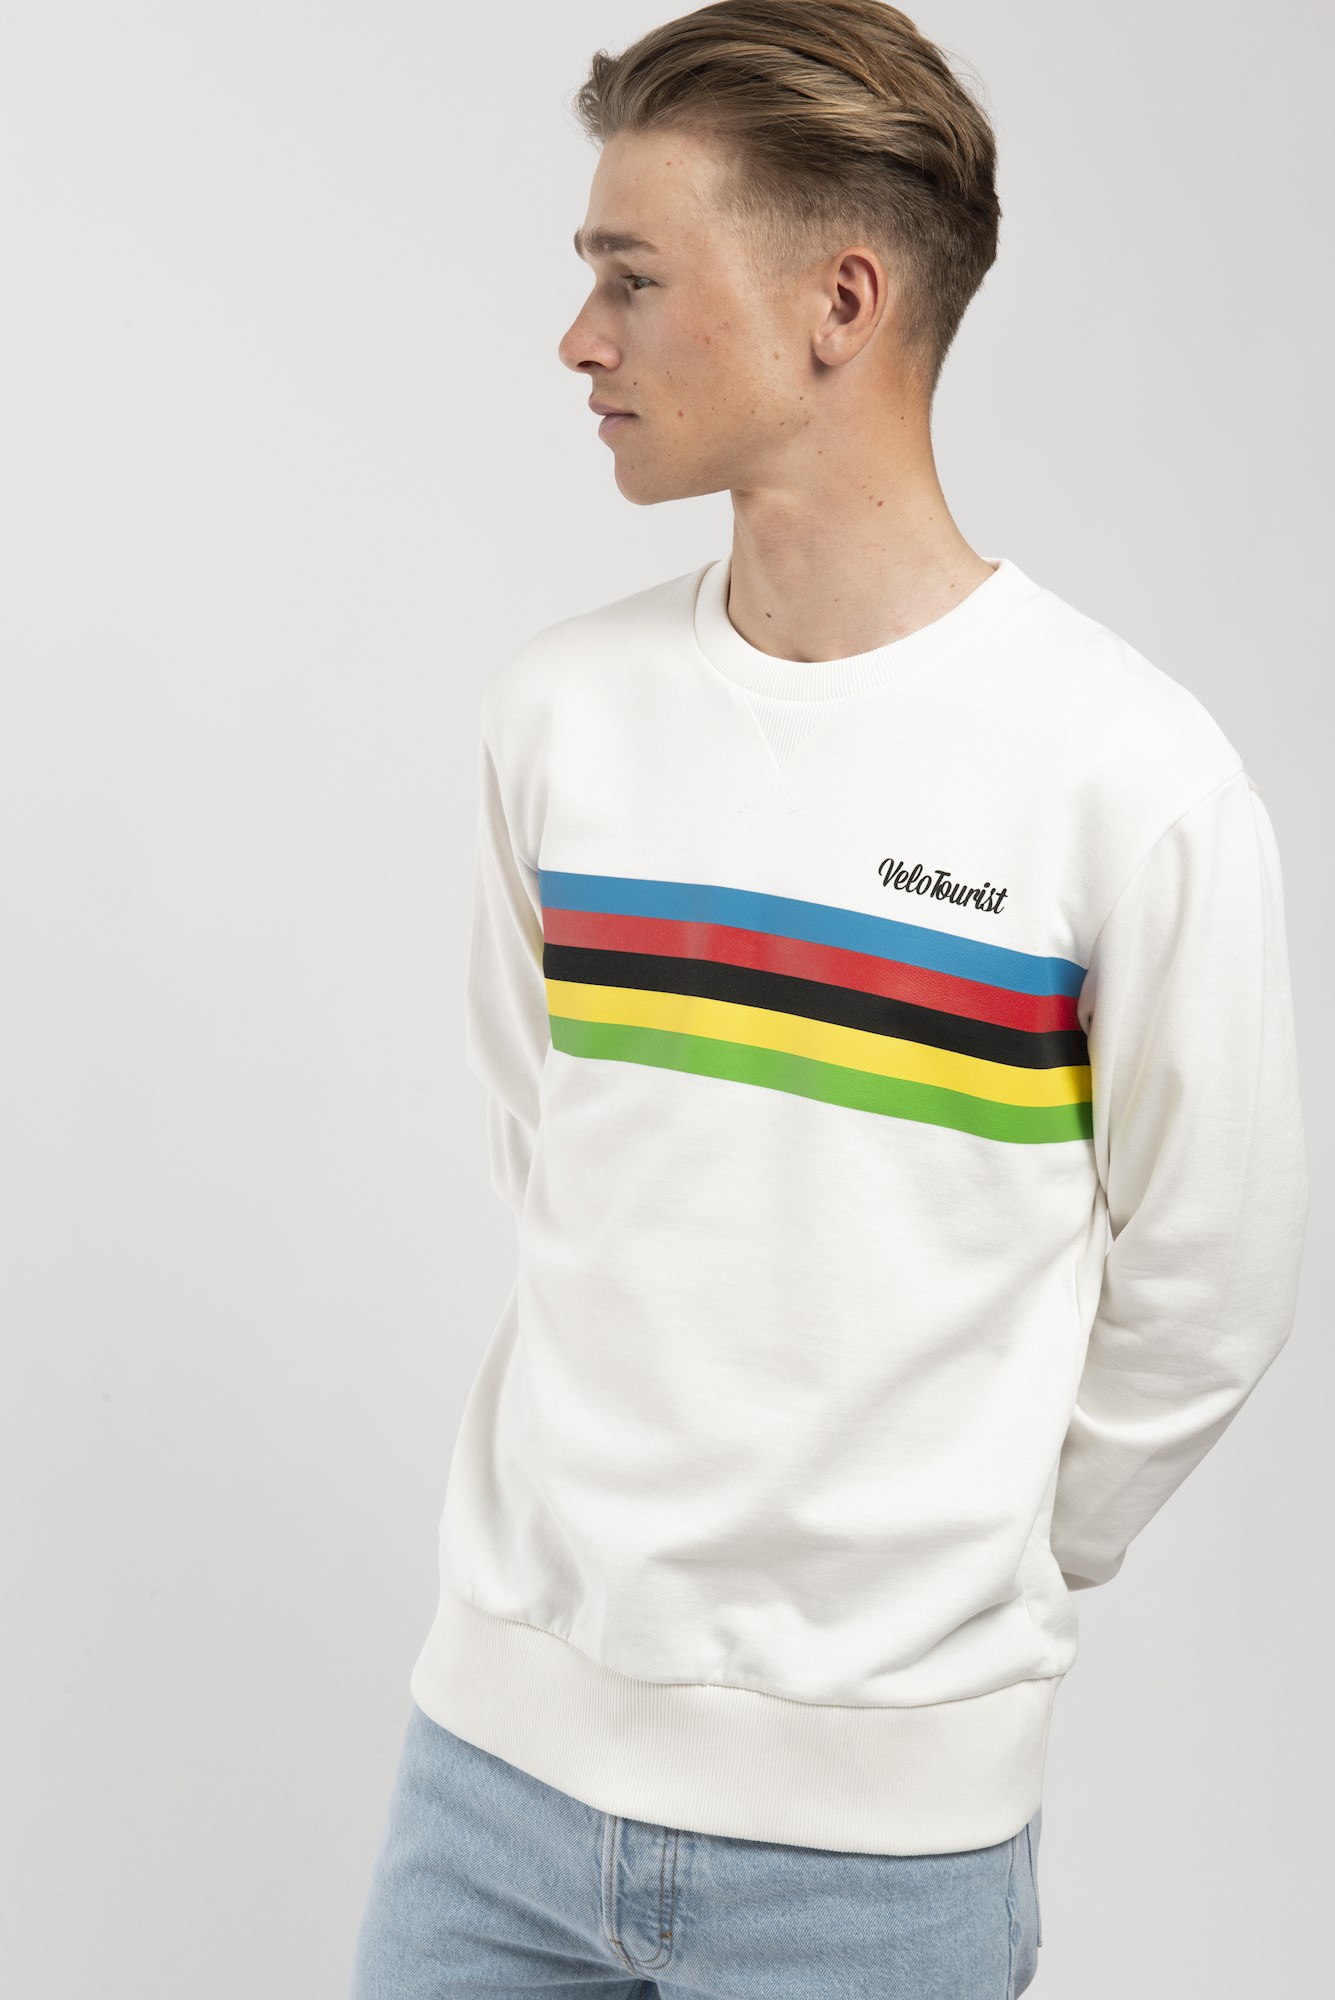 Productiecentrum verhouding Brawl Antwrp X UCI X Santini Sweater - Off-white - Crapule de Luxe